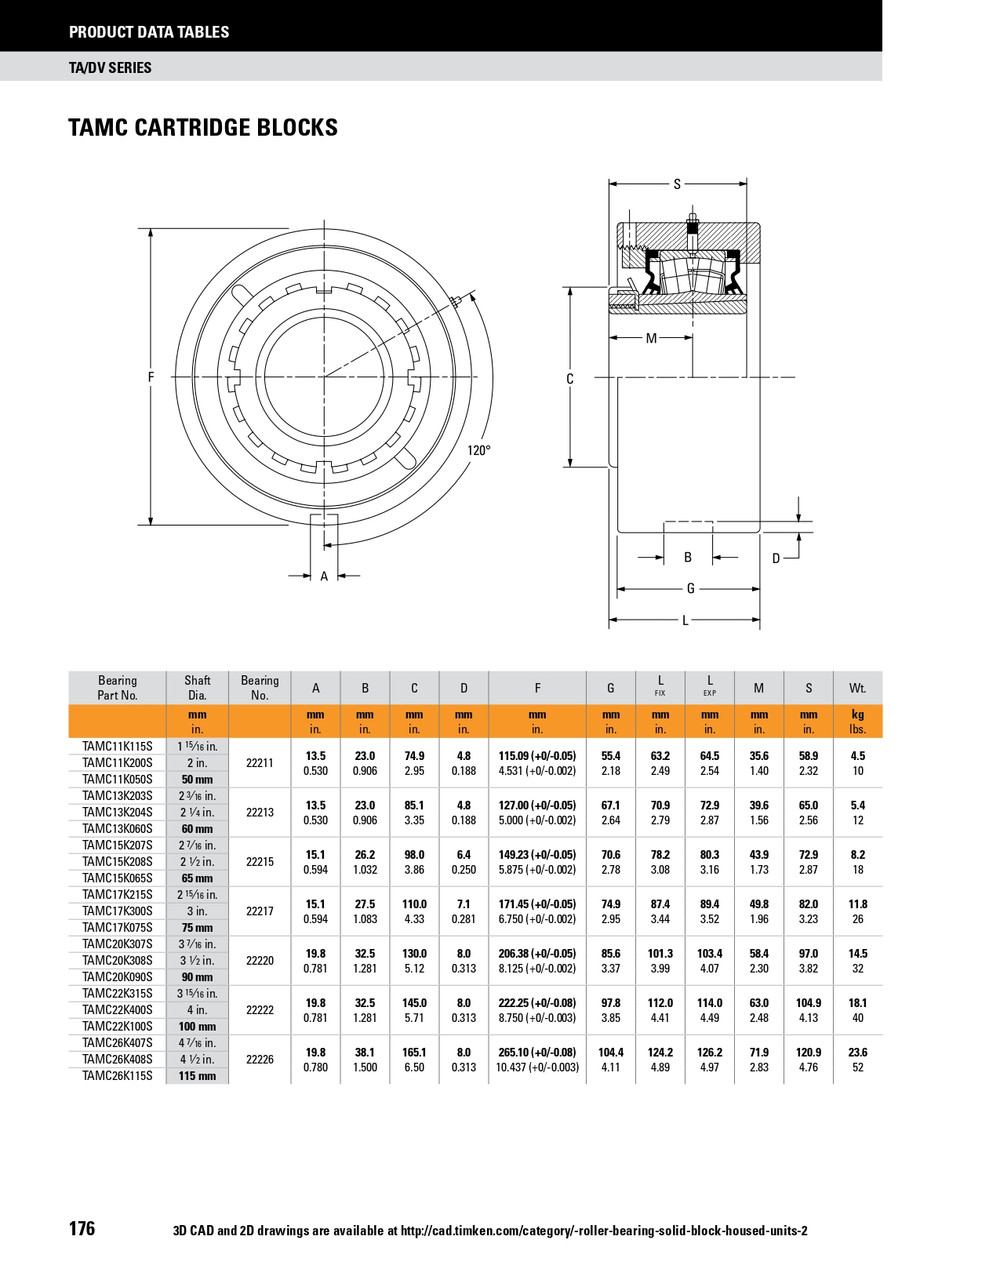 3-15/16" Timken TAMC Cartridge Bearing Block - Taper Lock Adapter - Teflon Labyrinth Seals - Fixed  TAMC22K315ST